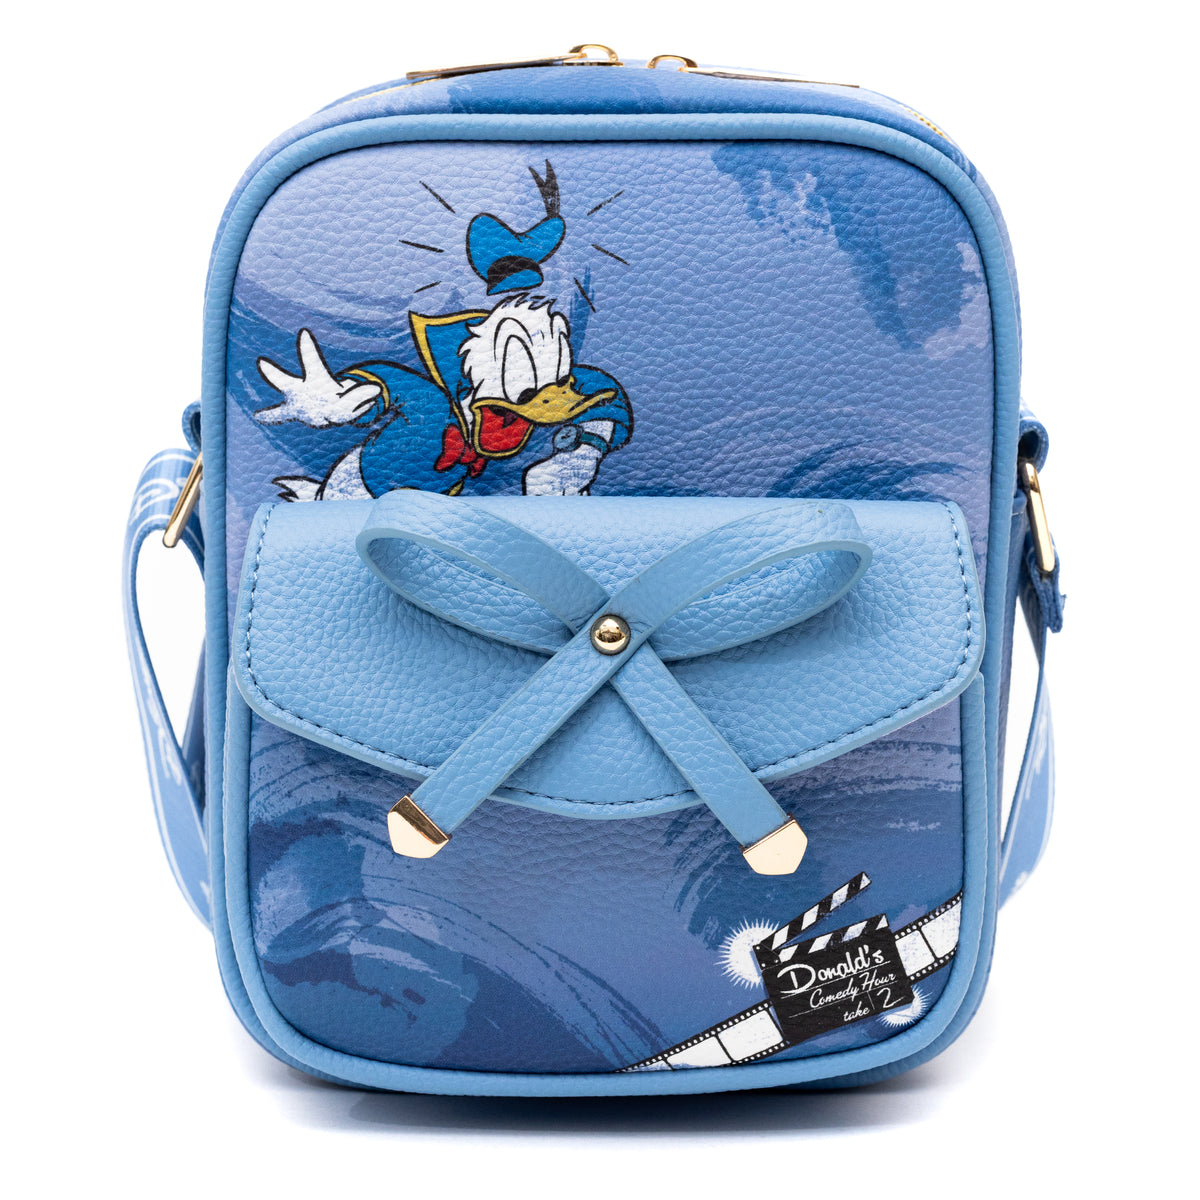 Wondapop Disney Villains Luxe 8 Crossbody Bag